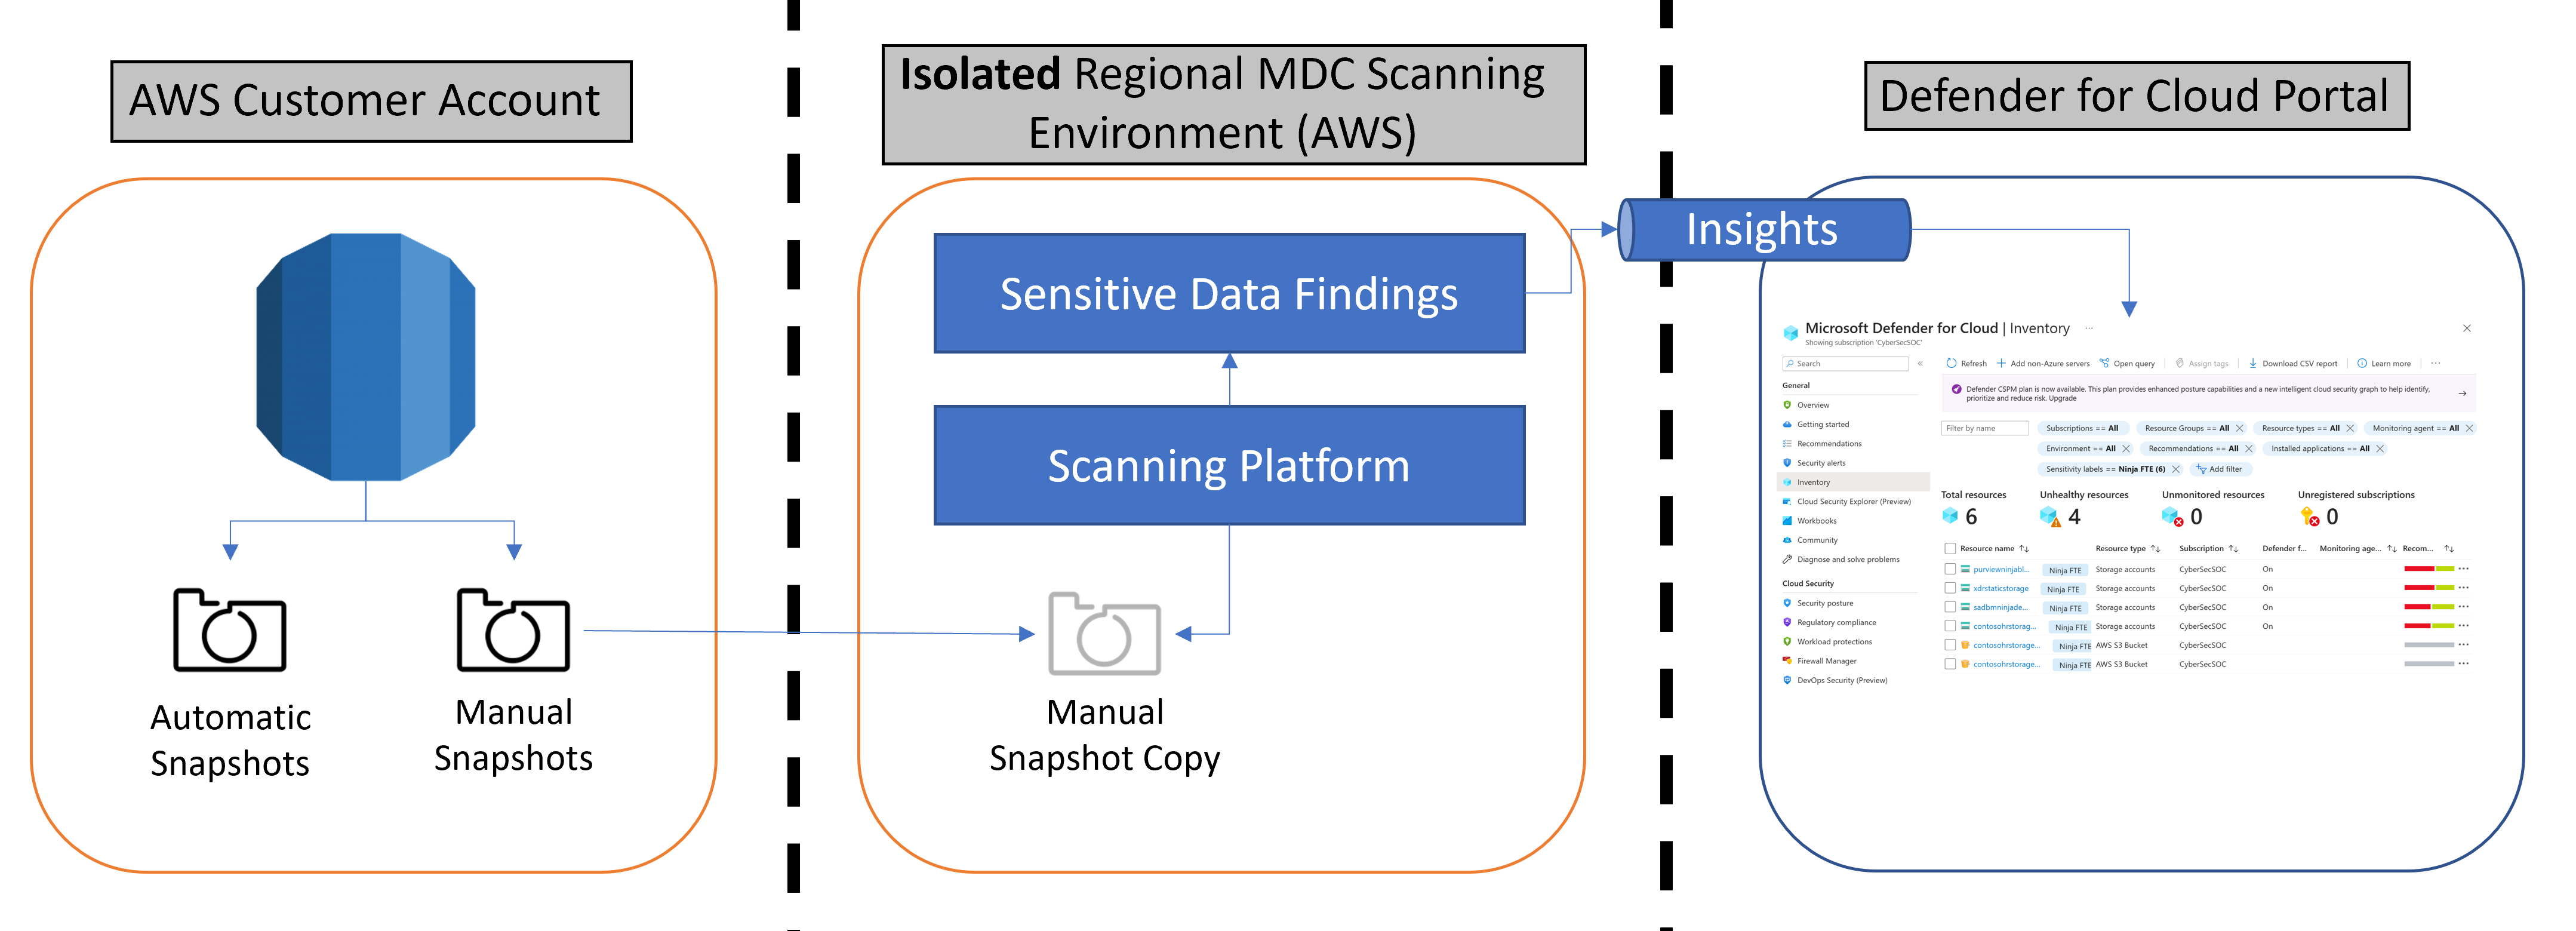 Diagram explaining the RDS scanning platform.